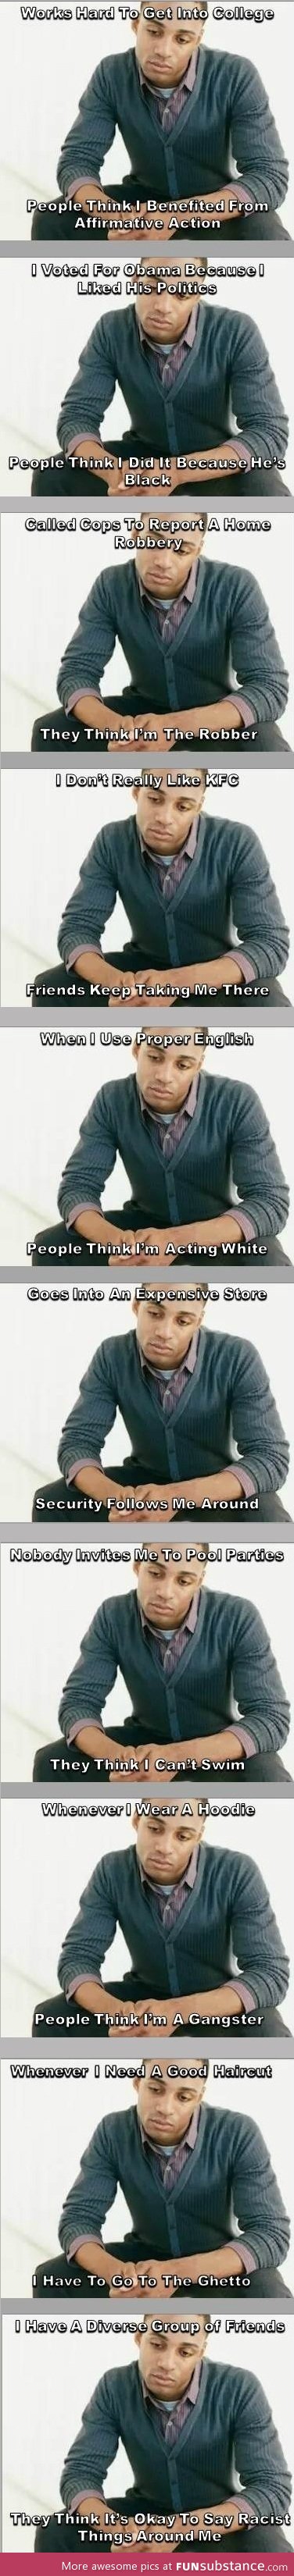 Black people problems